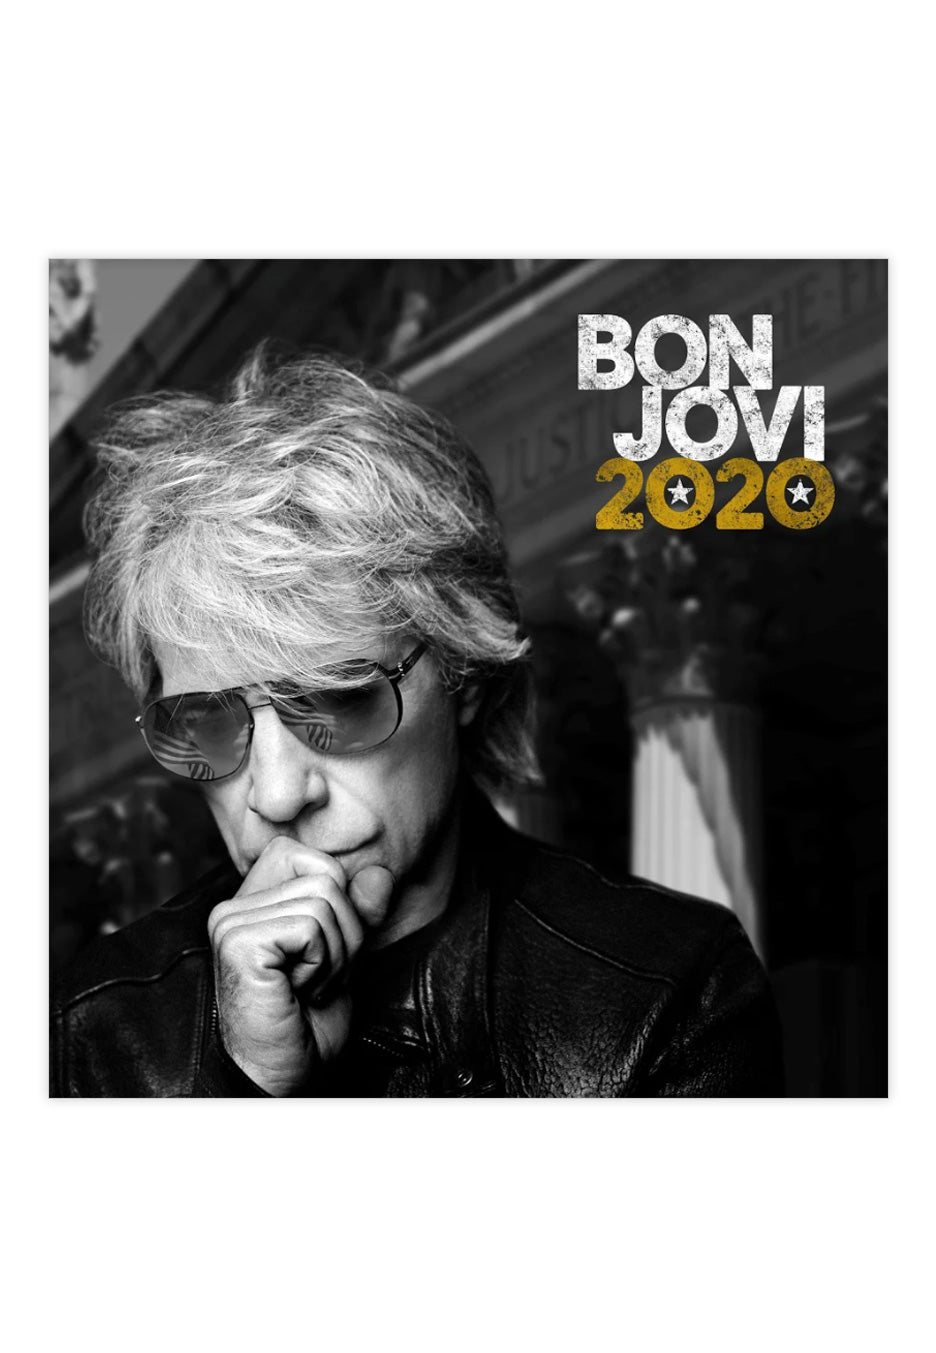 Bon Jovi - 2020 - CD